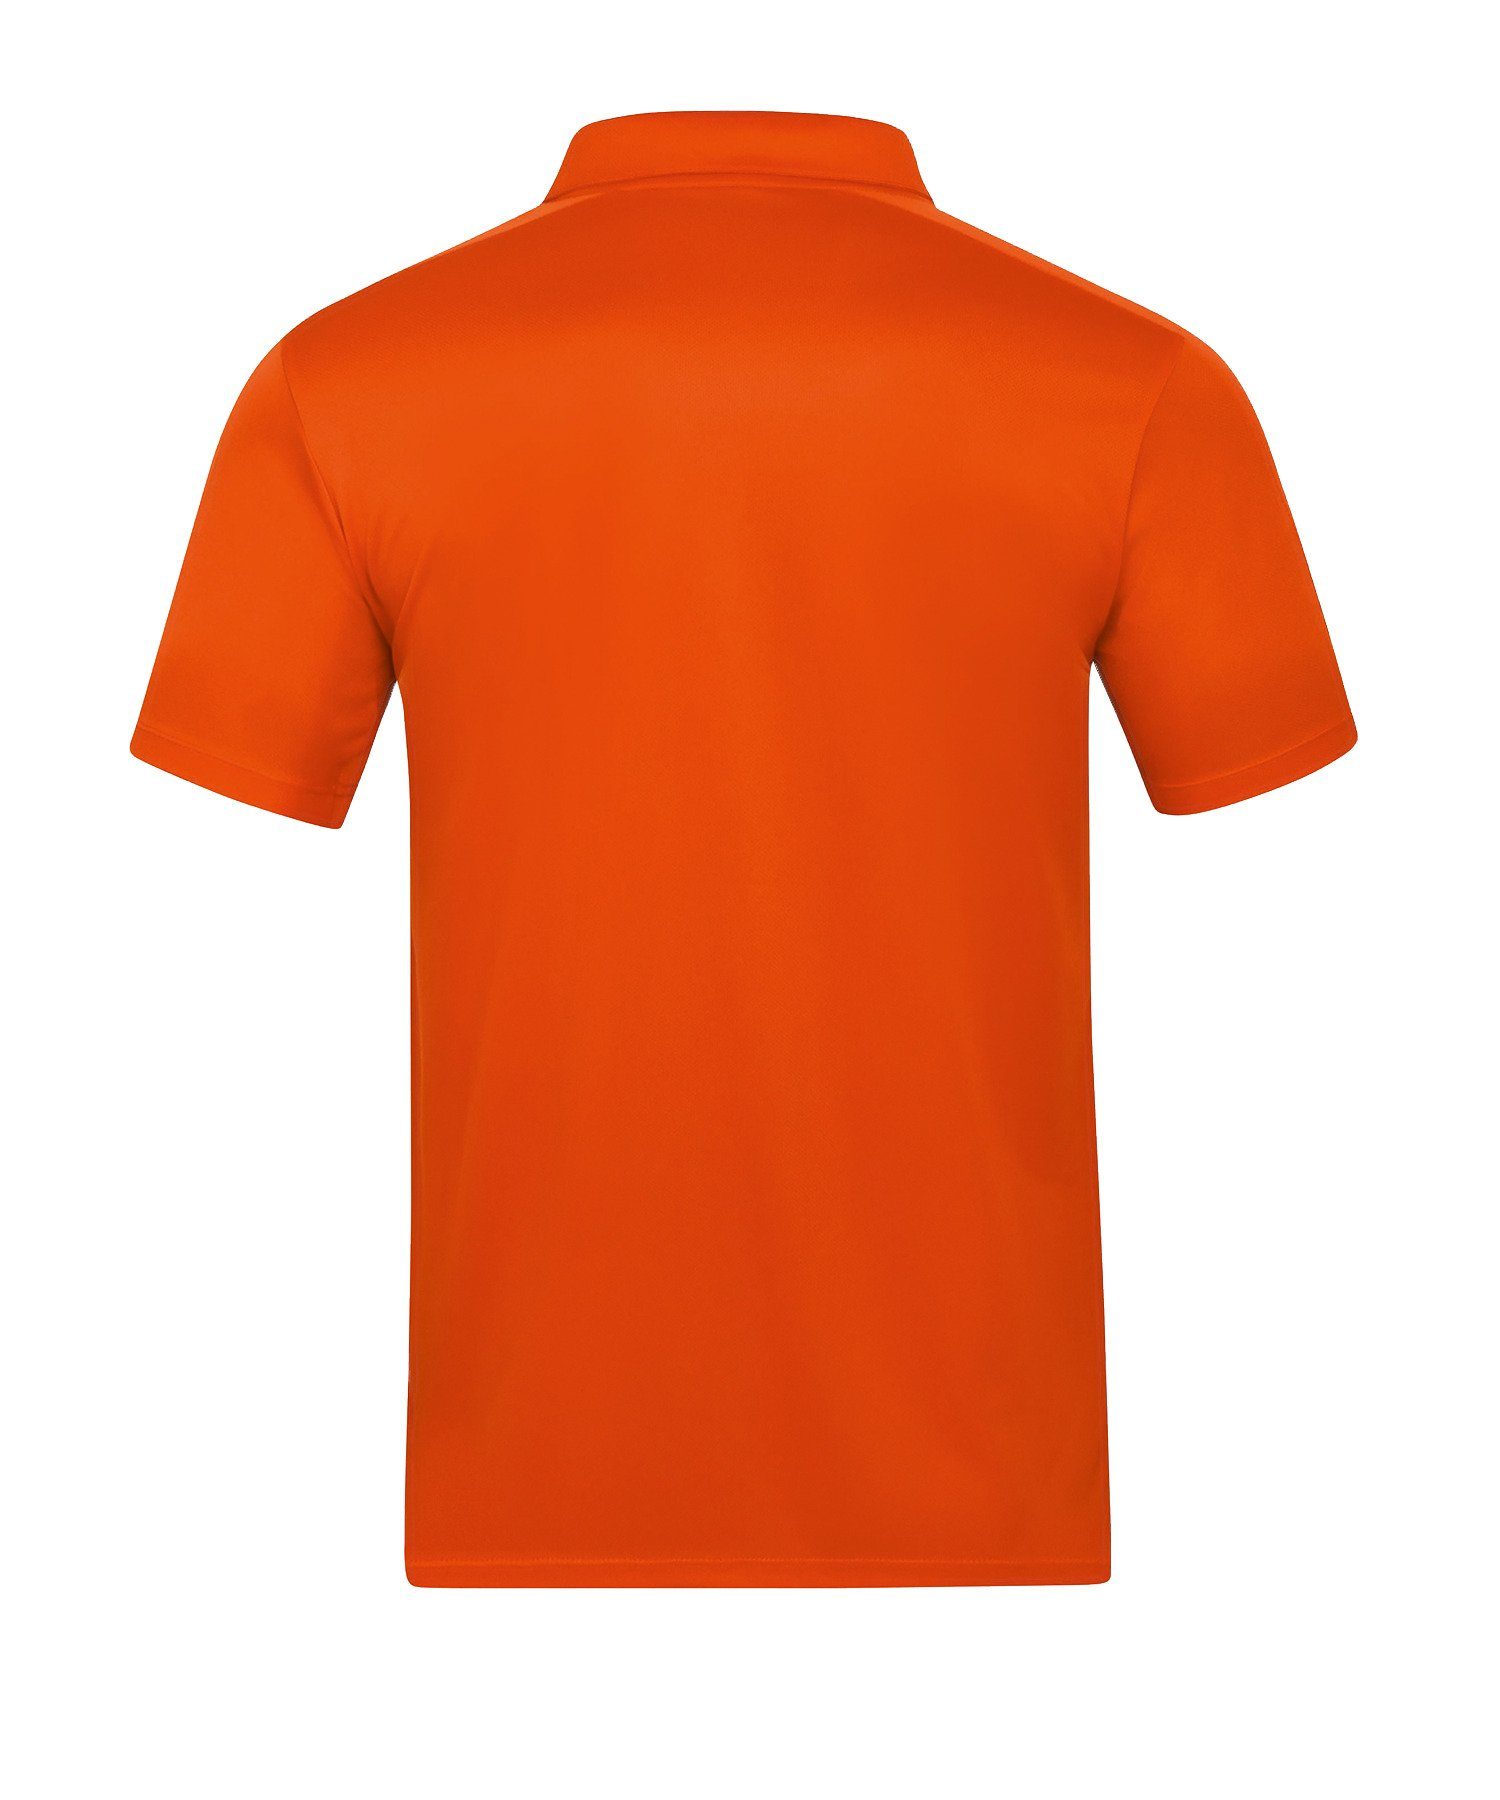 default Poloshirt Classico Orange T-Shirt Jako